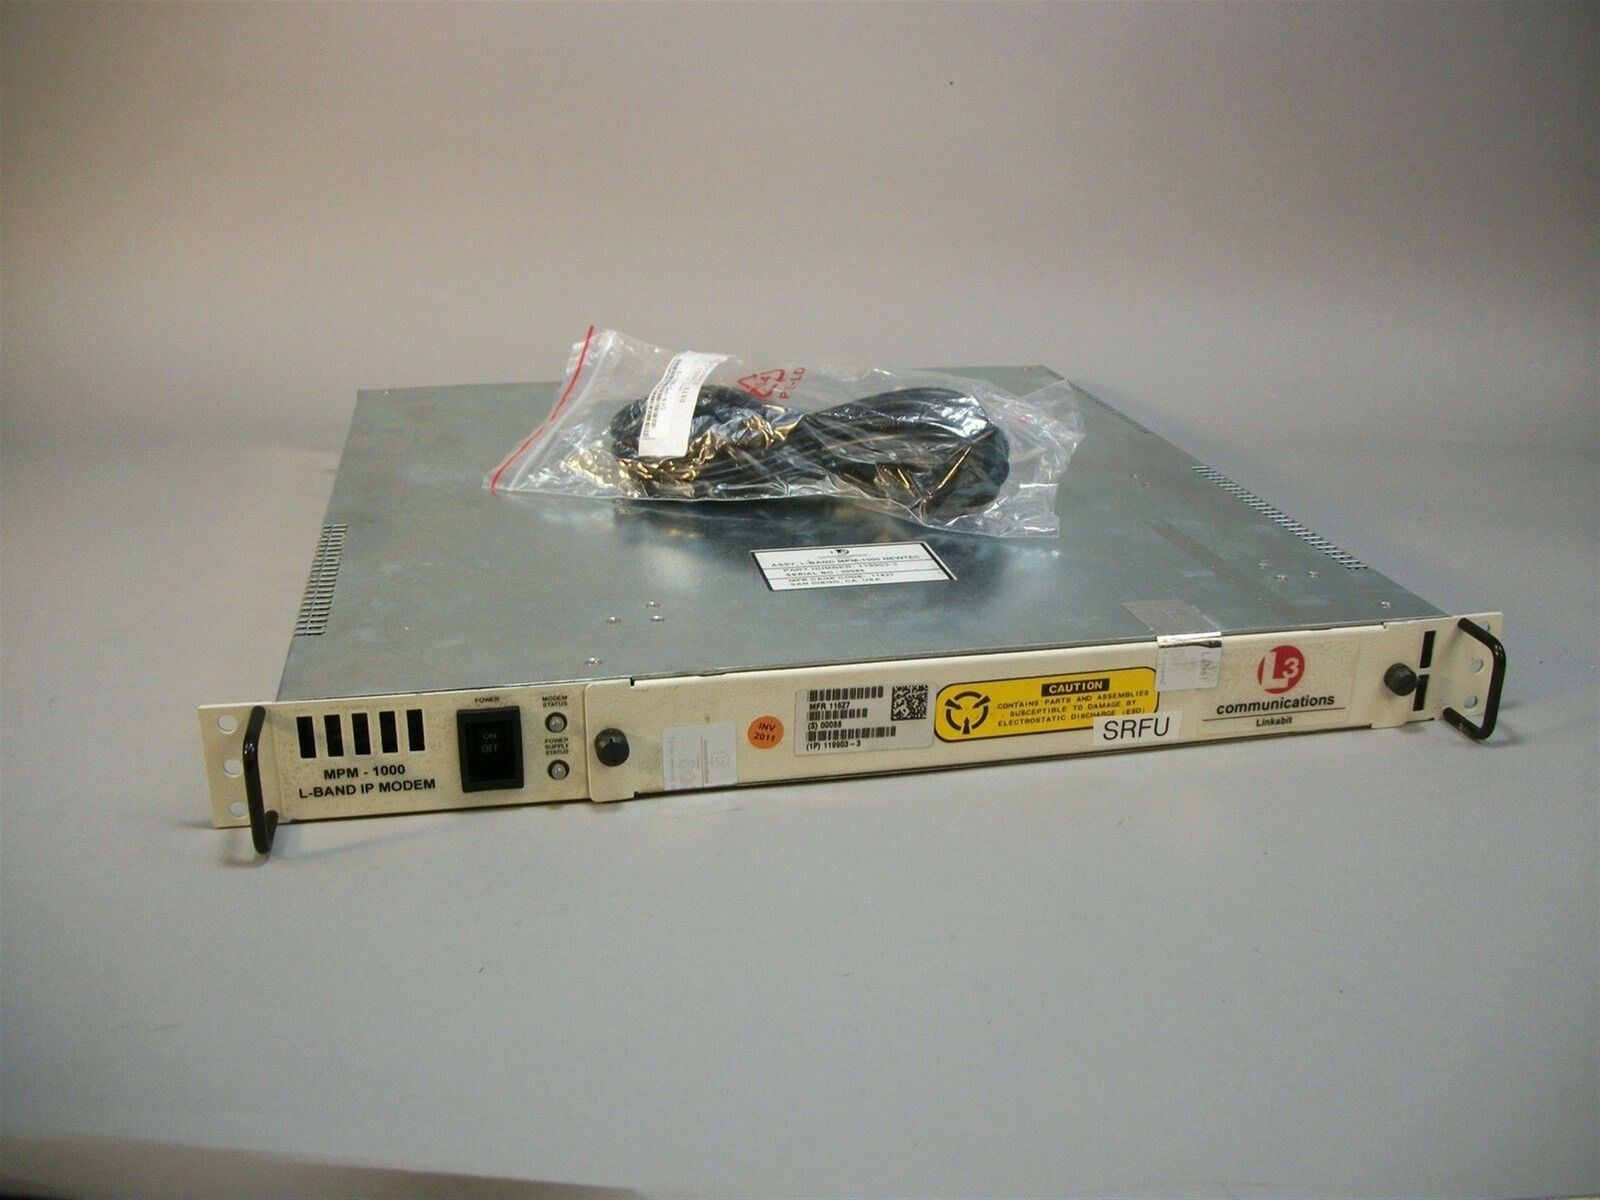 L3 Communications Linkabit Mpm - 1000 L-band Ip Modem - Used - Export Controlled